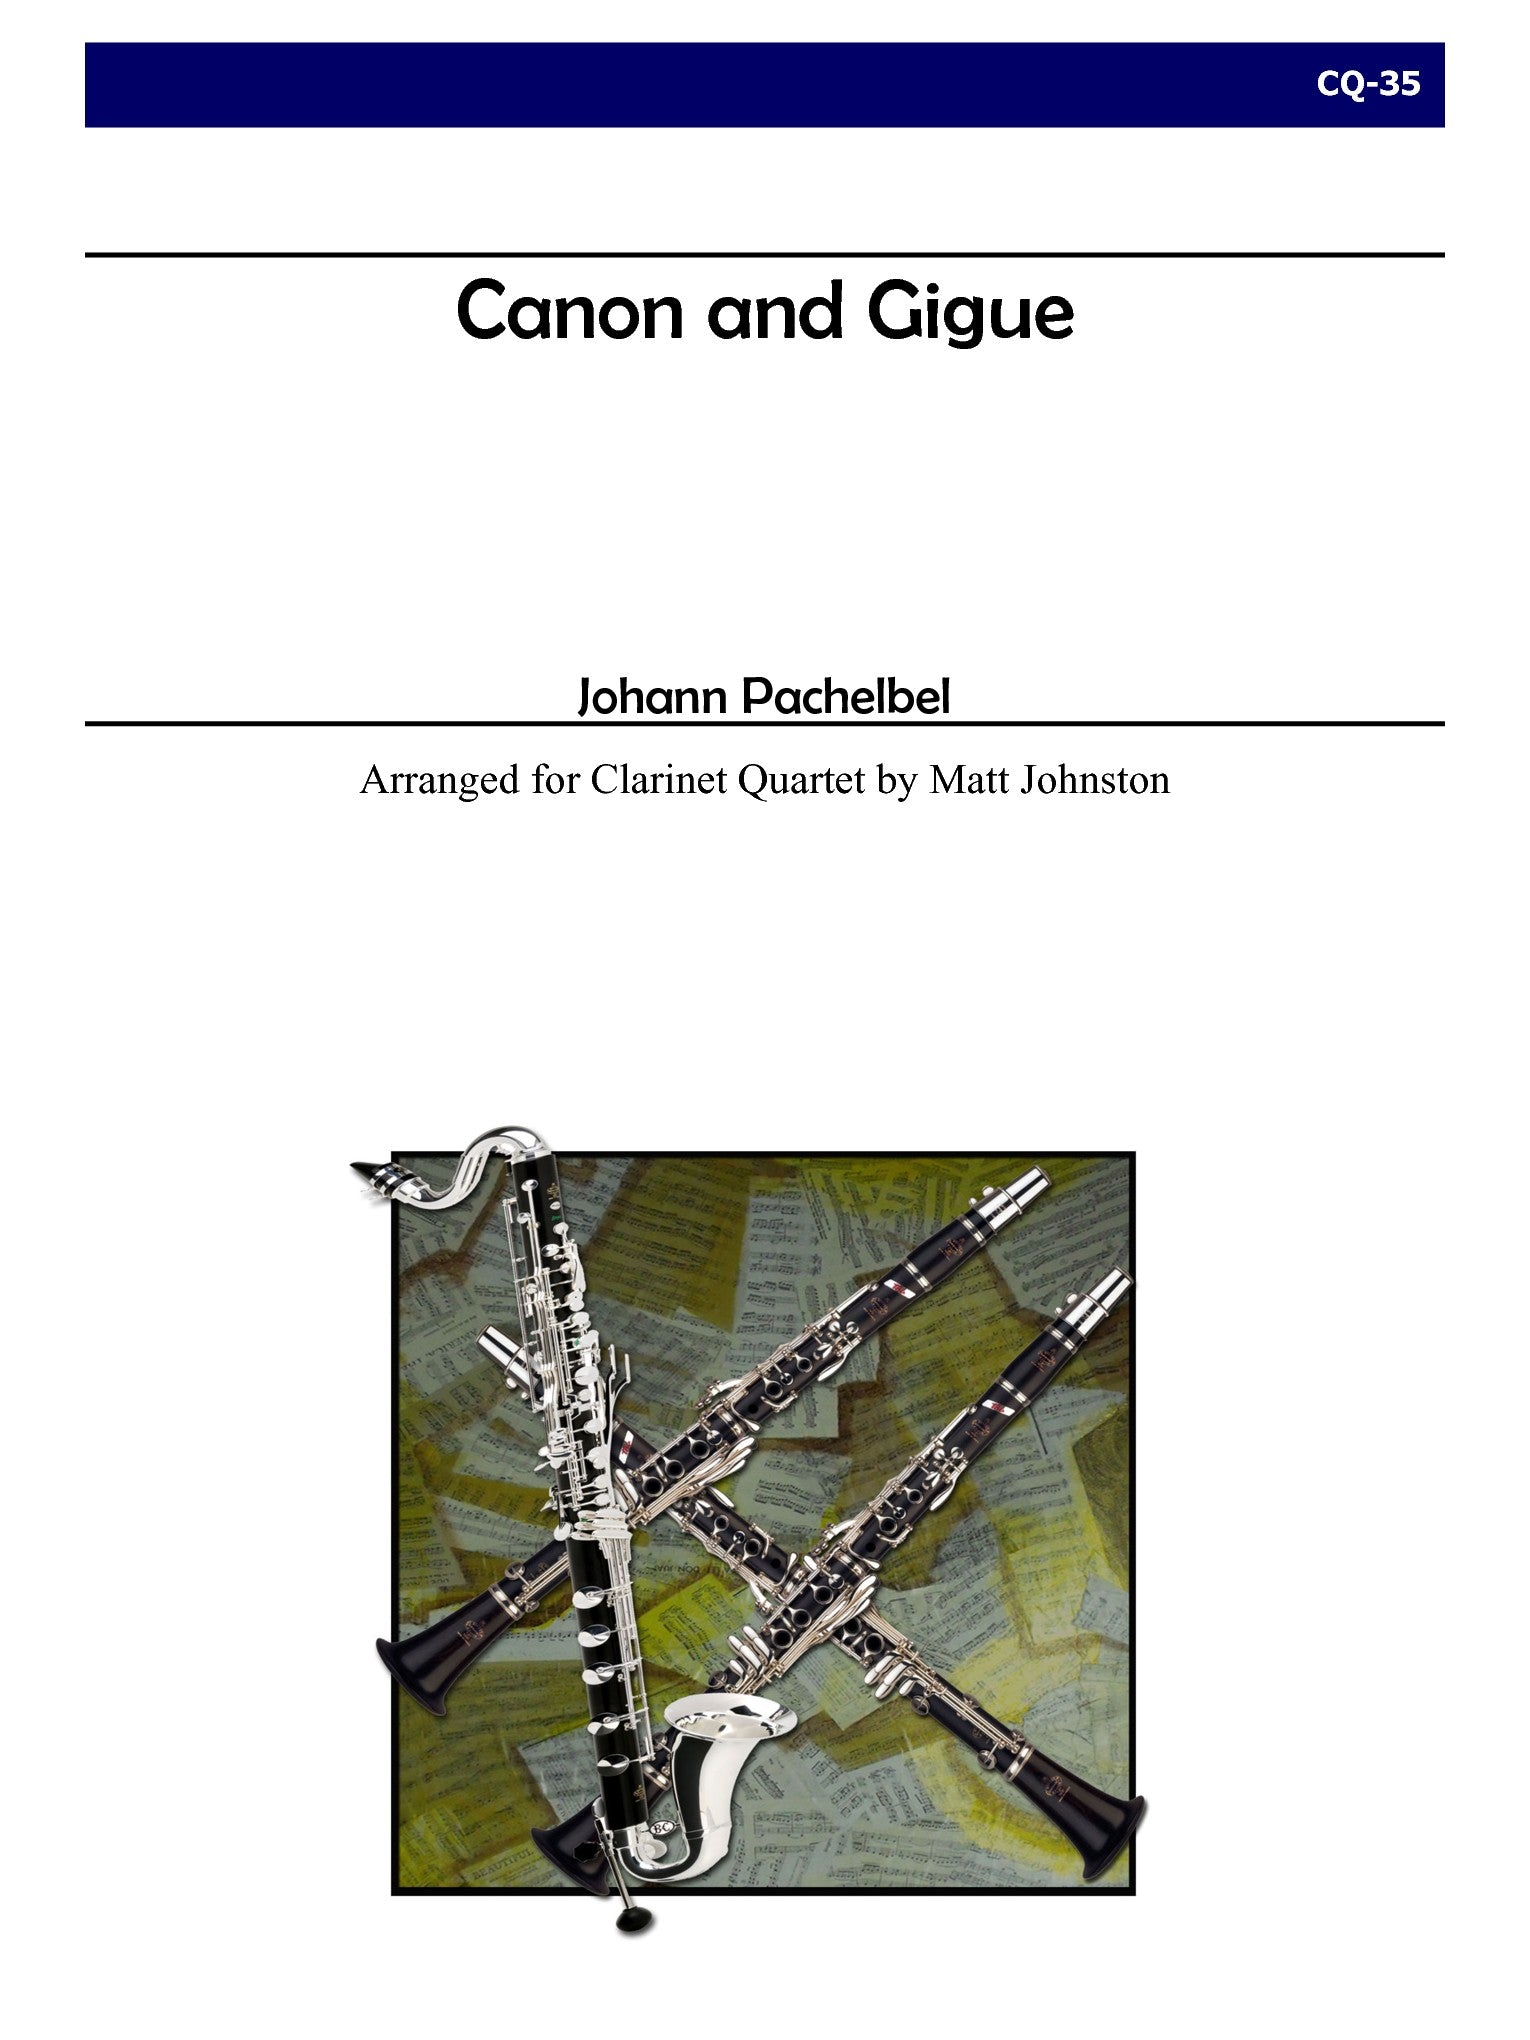 Pachelbel (arr. Matt Johnston) - Canon and Gigue for Clarinet Quartet